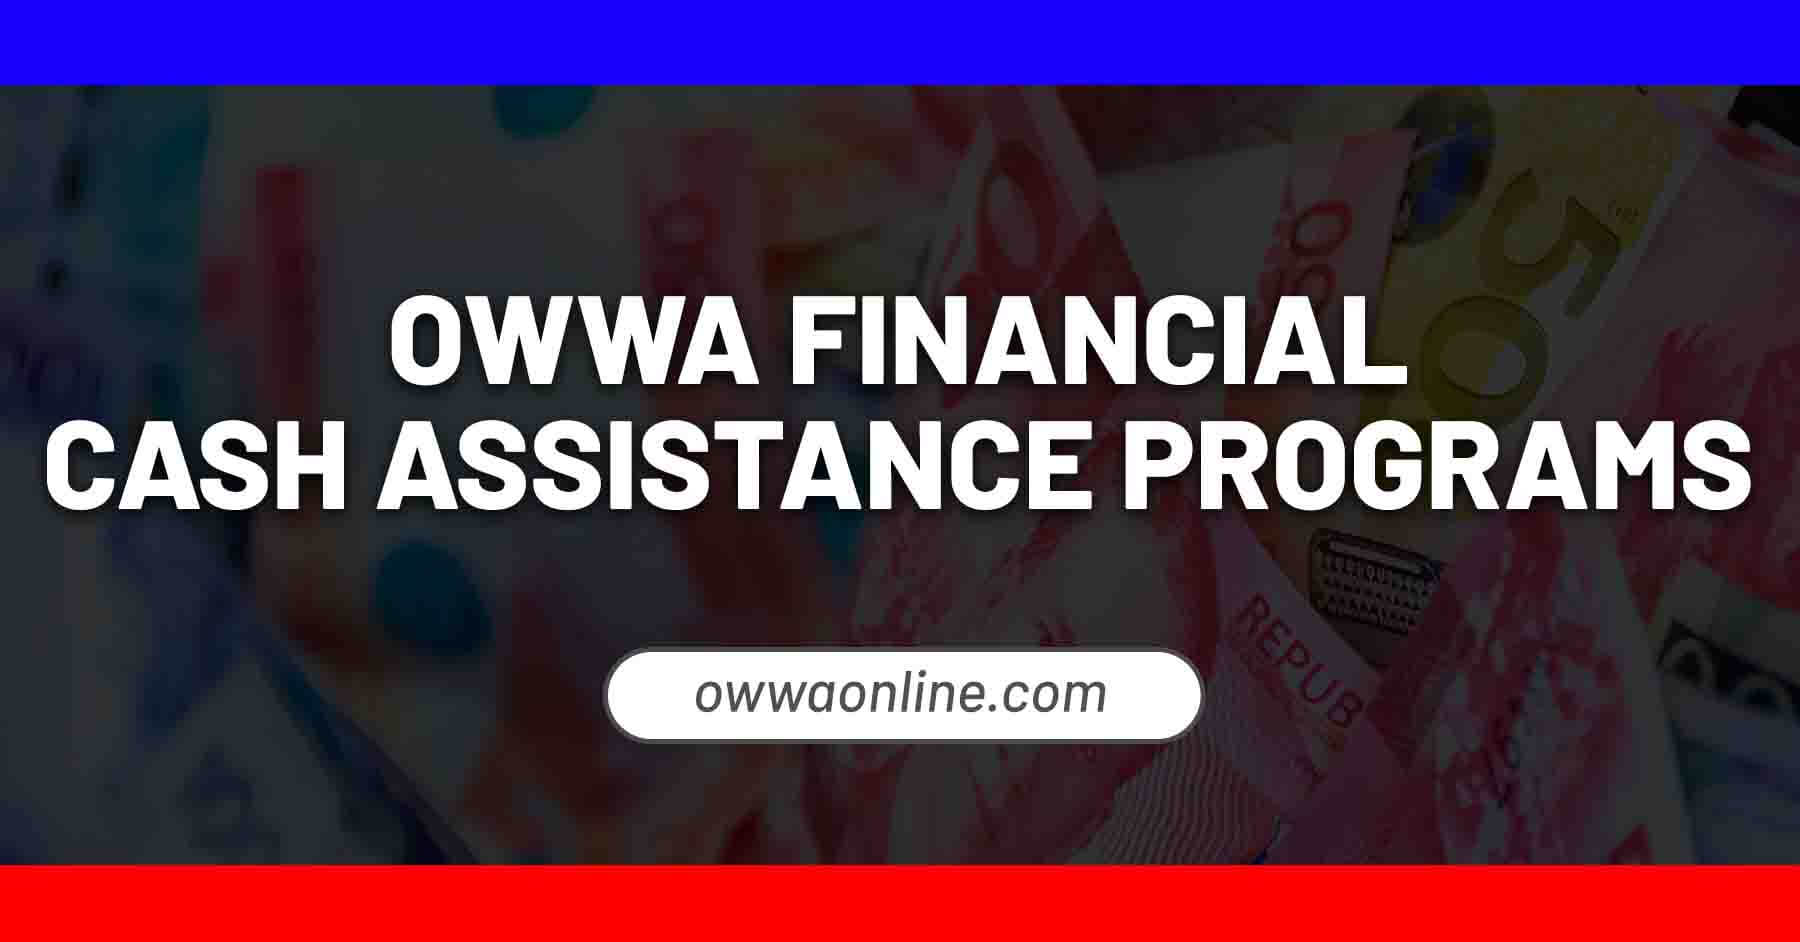 financial assistance programs by owwa